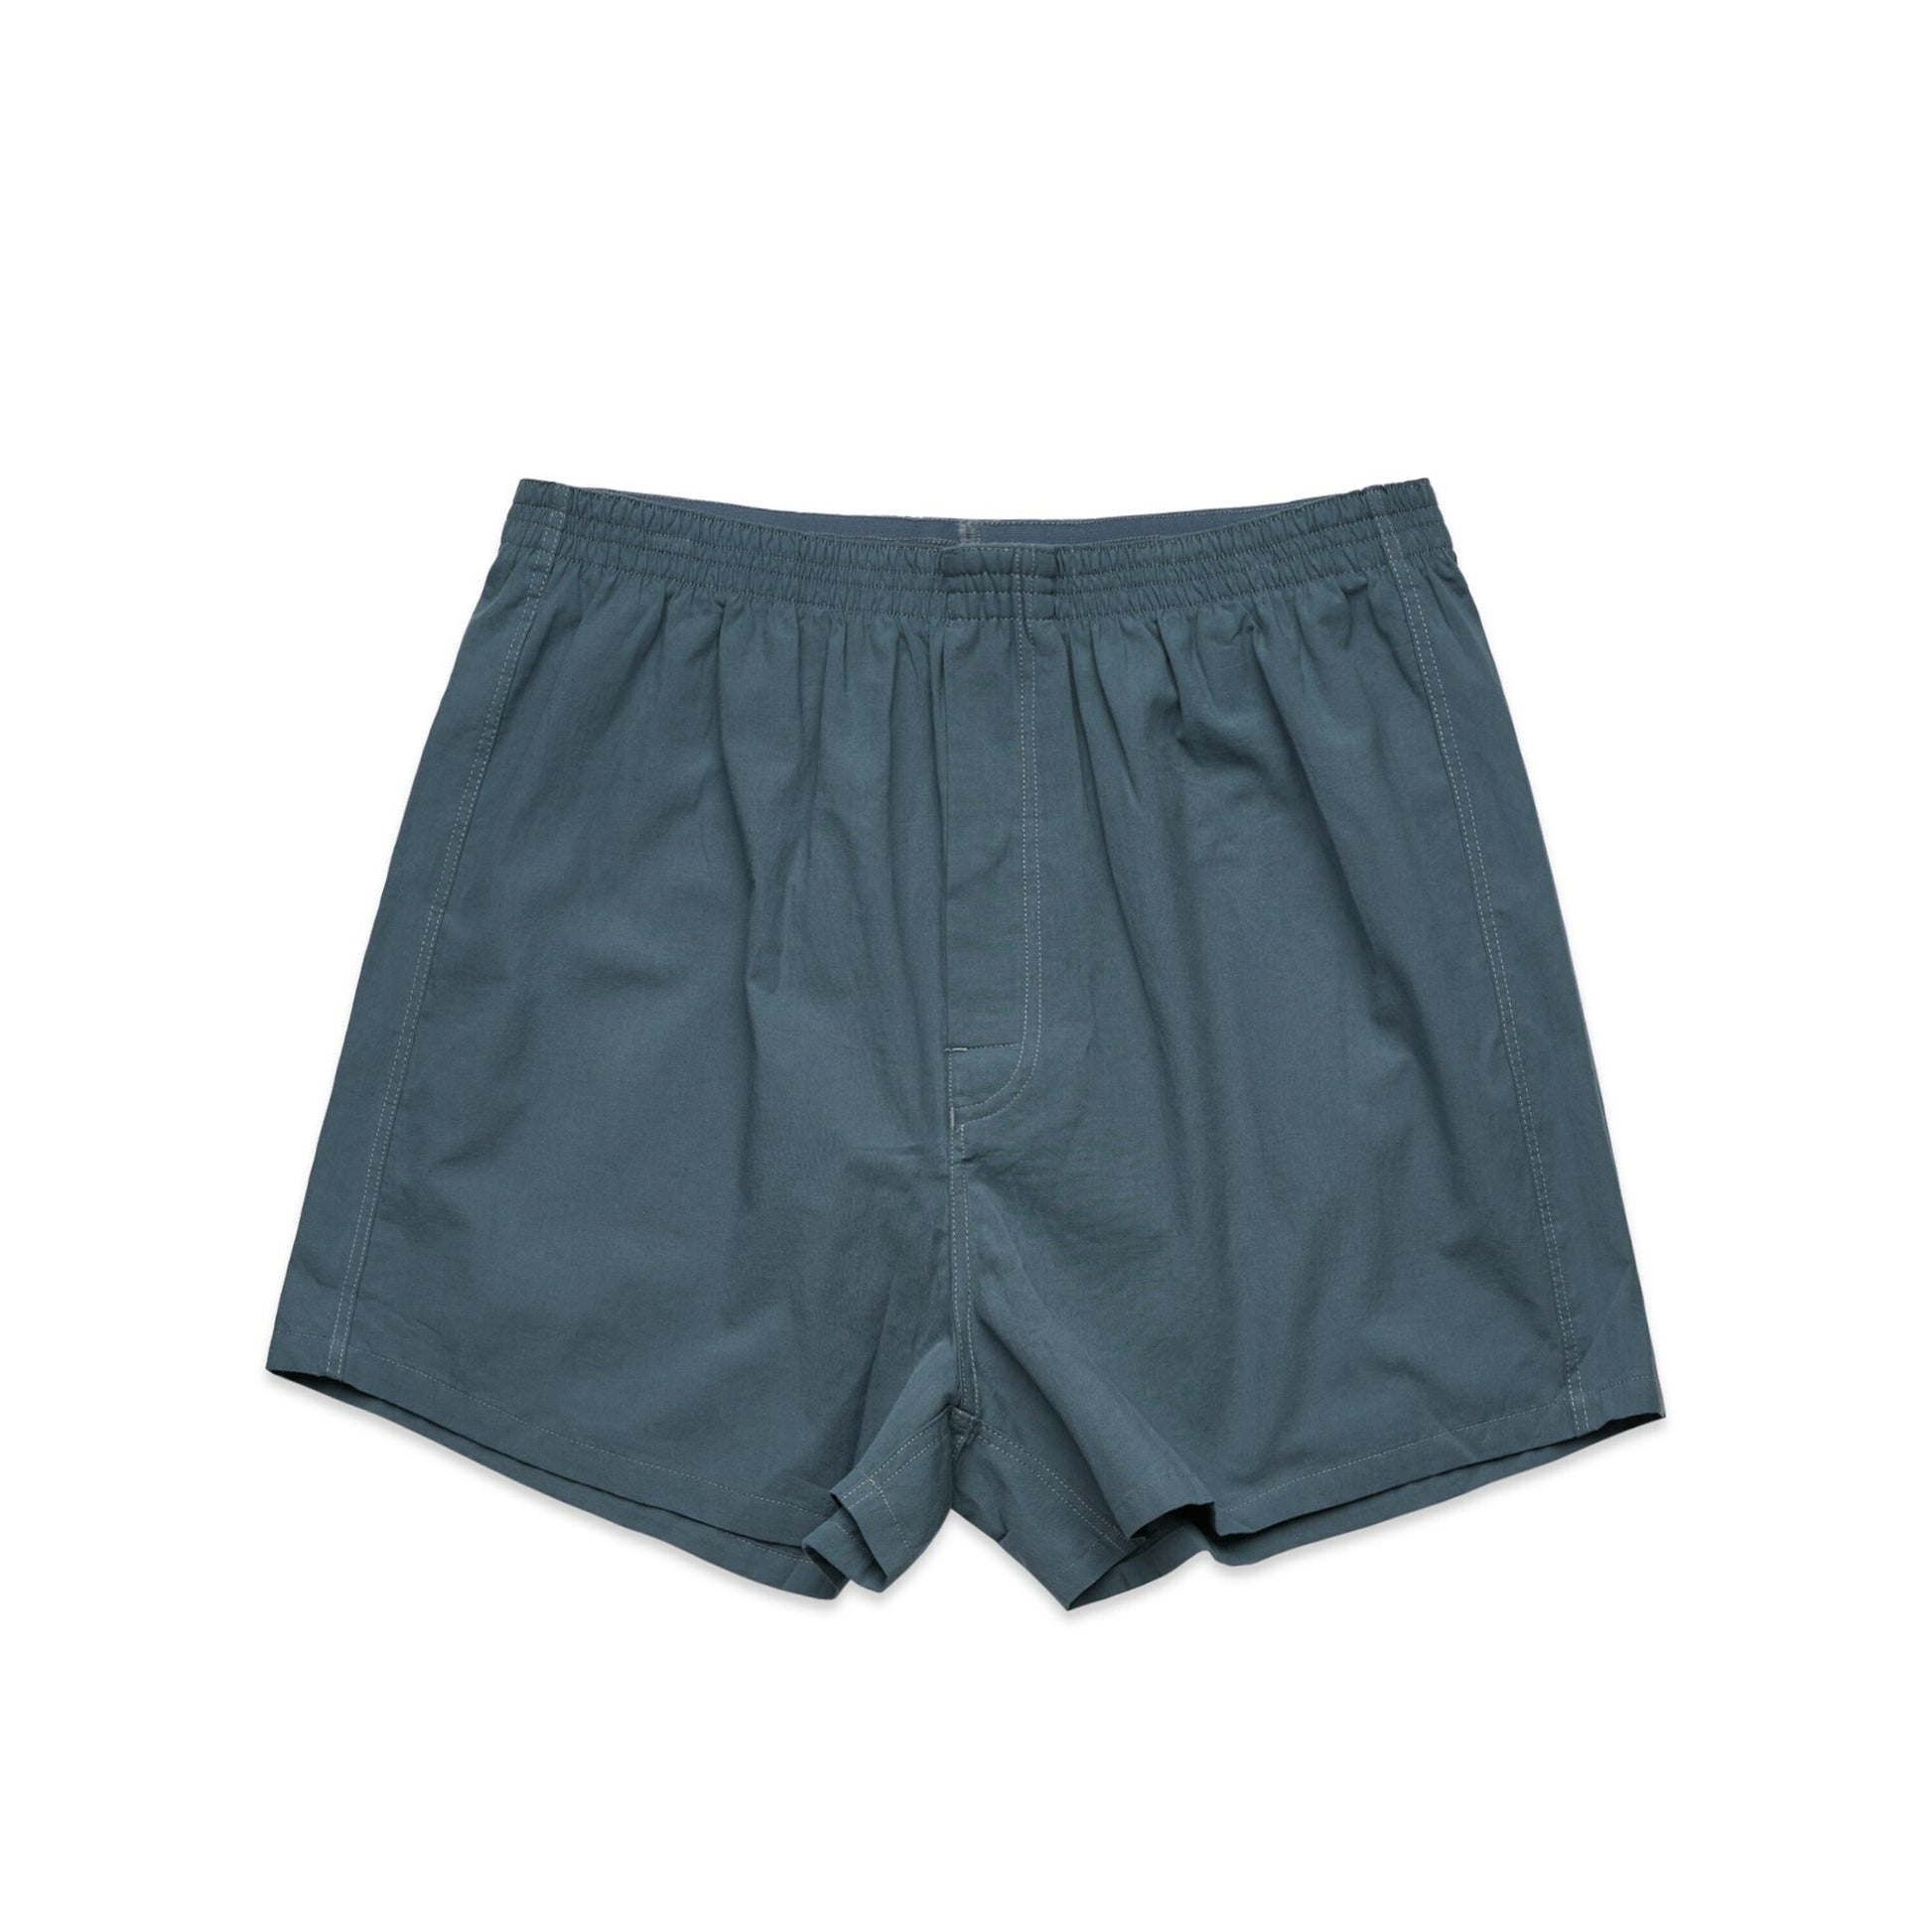 Ascolour Mens Boxer Shorts (1202)